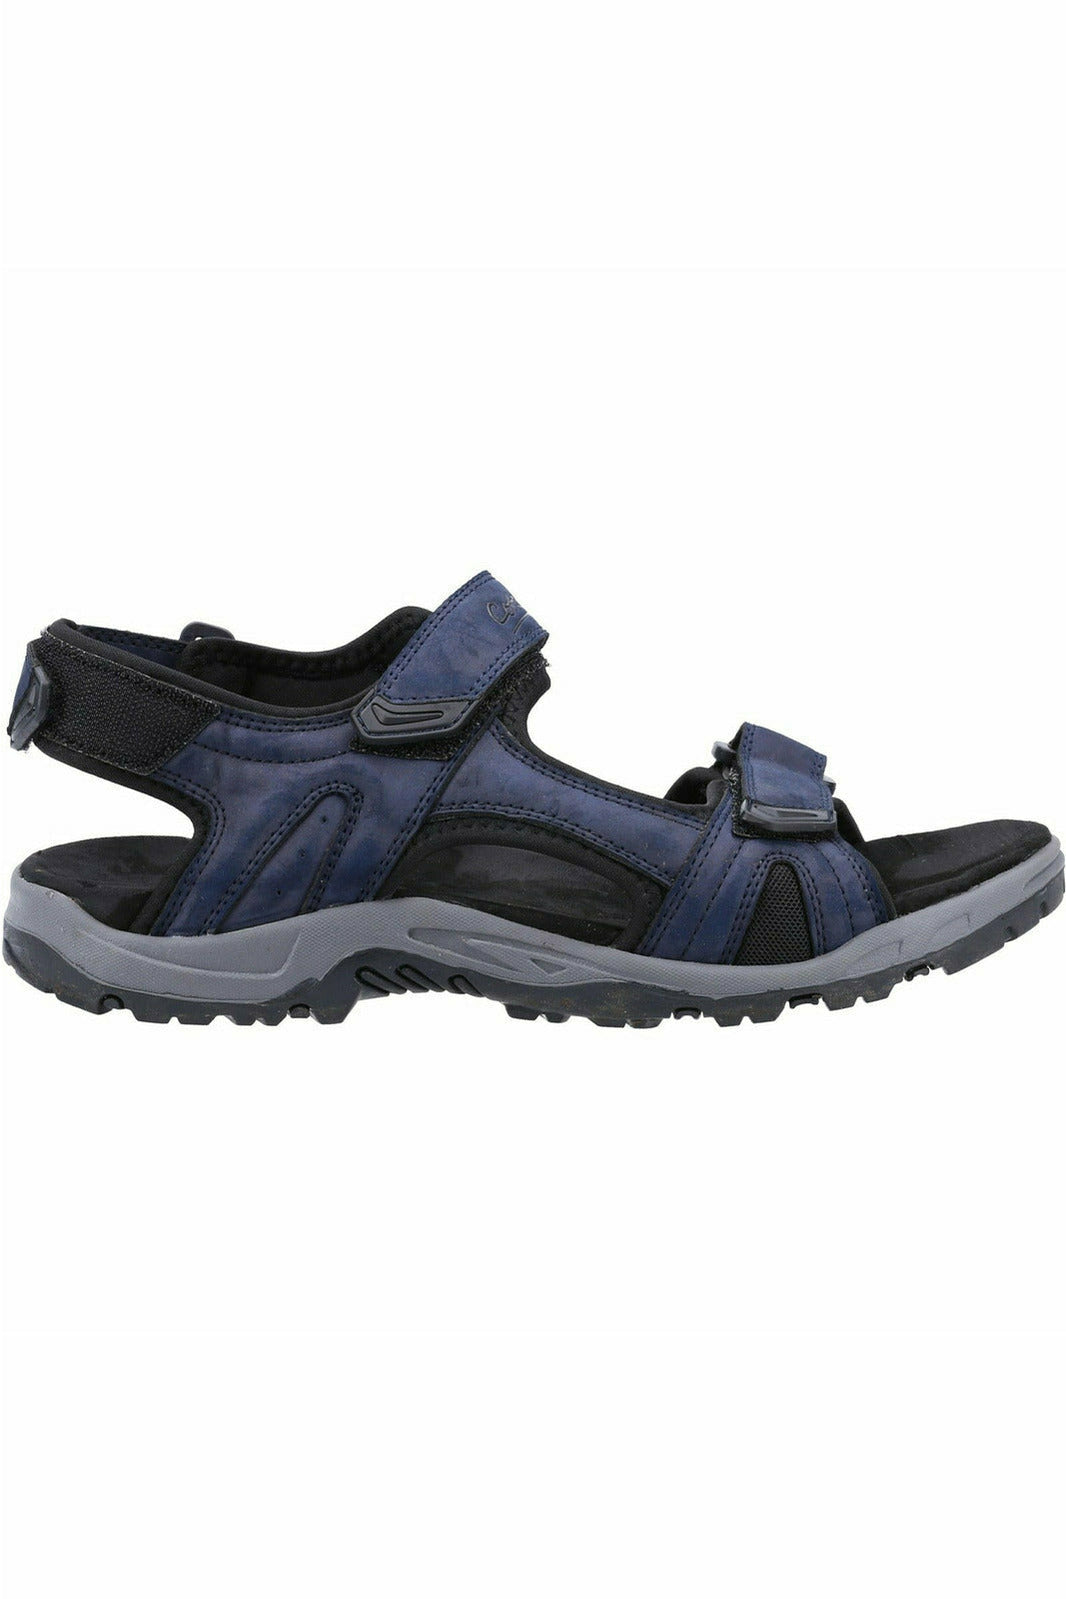 Cotswold - Shilton Recyled Men's Sandal